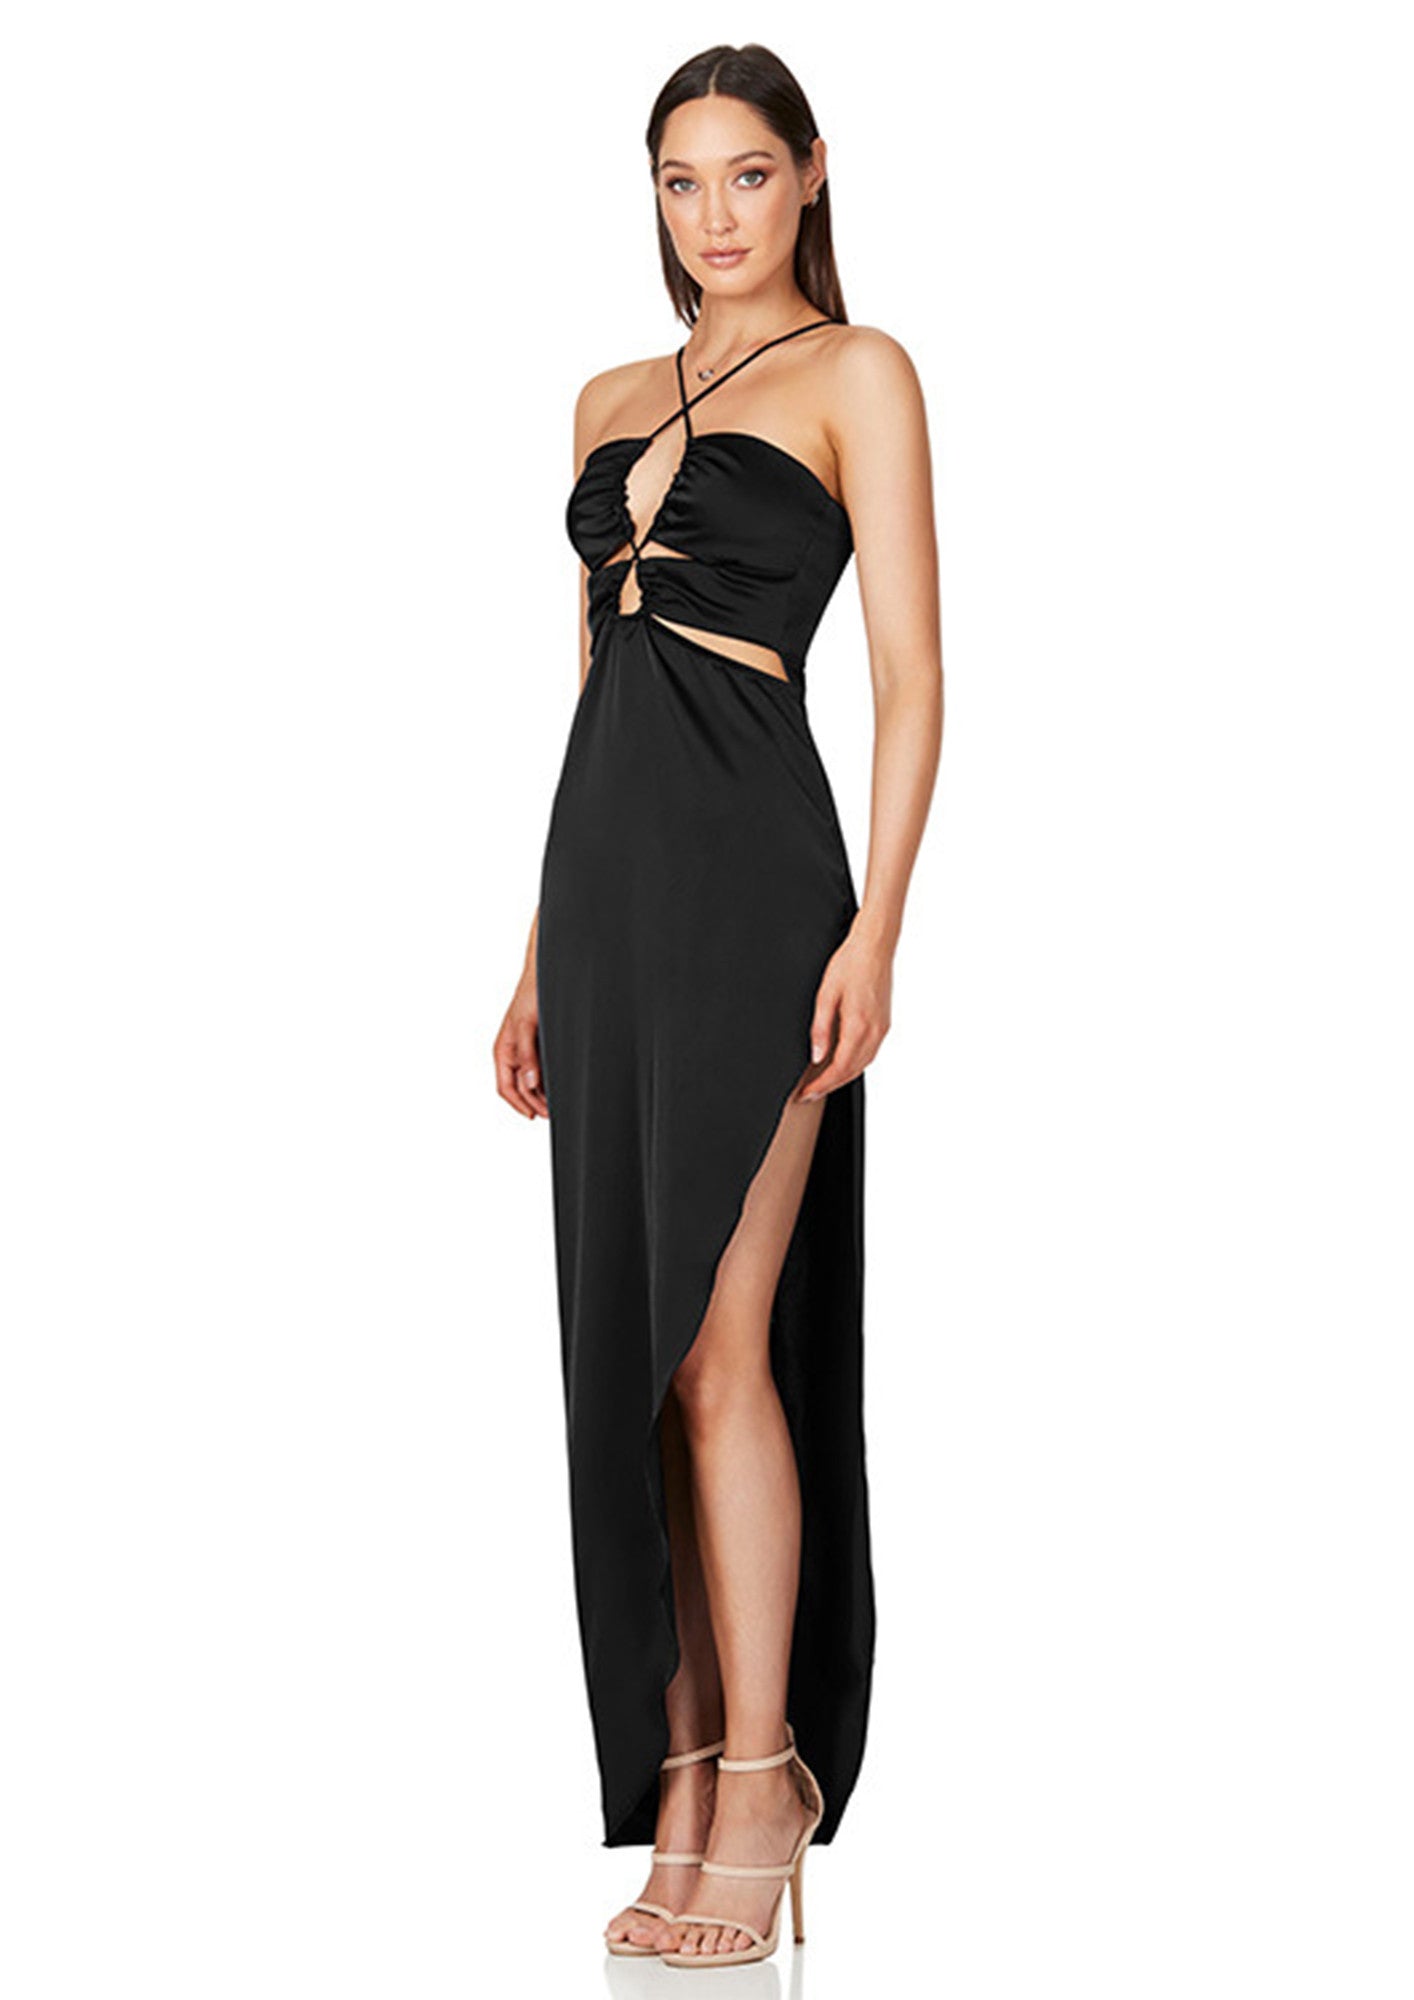 Black Cutout Dress with Slit - WomanLikeU